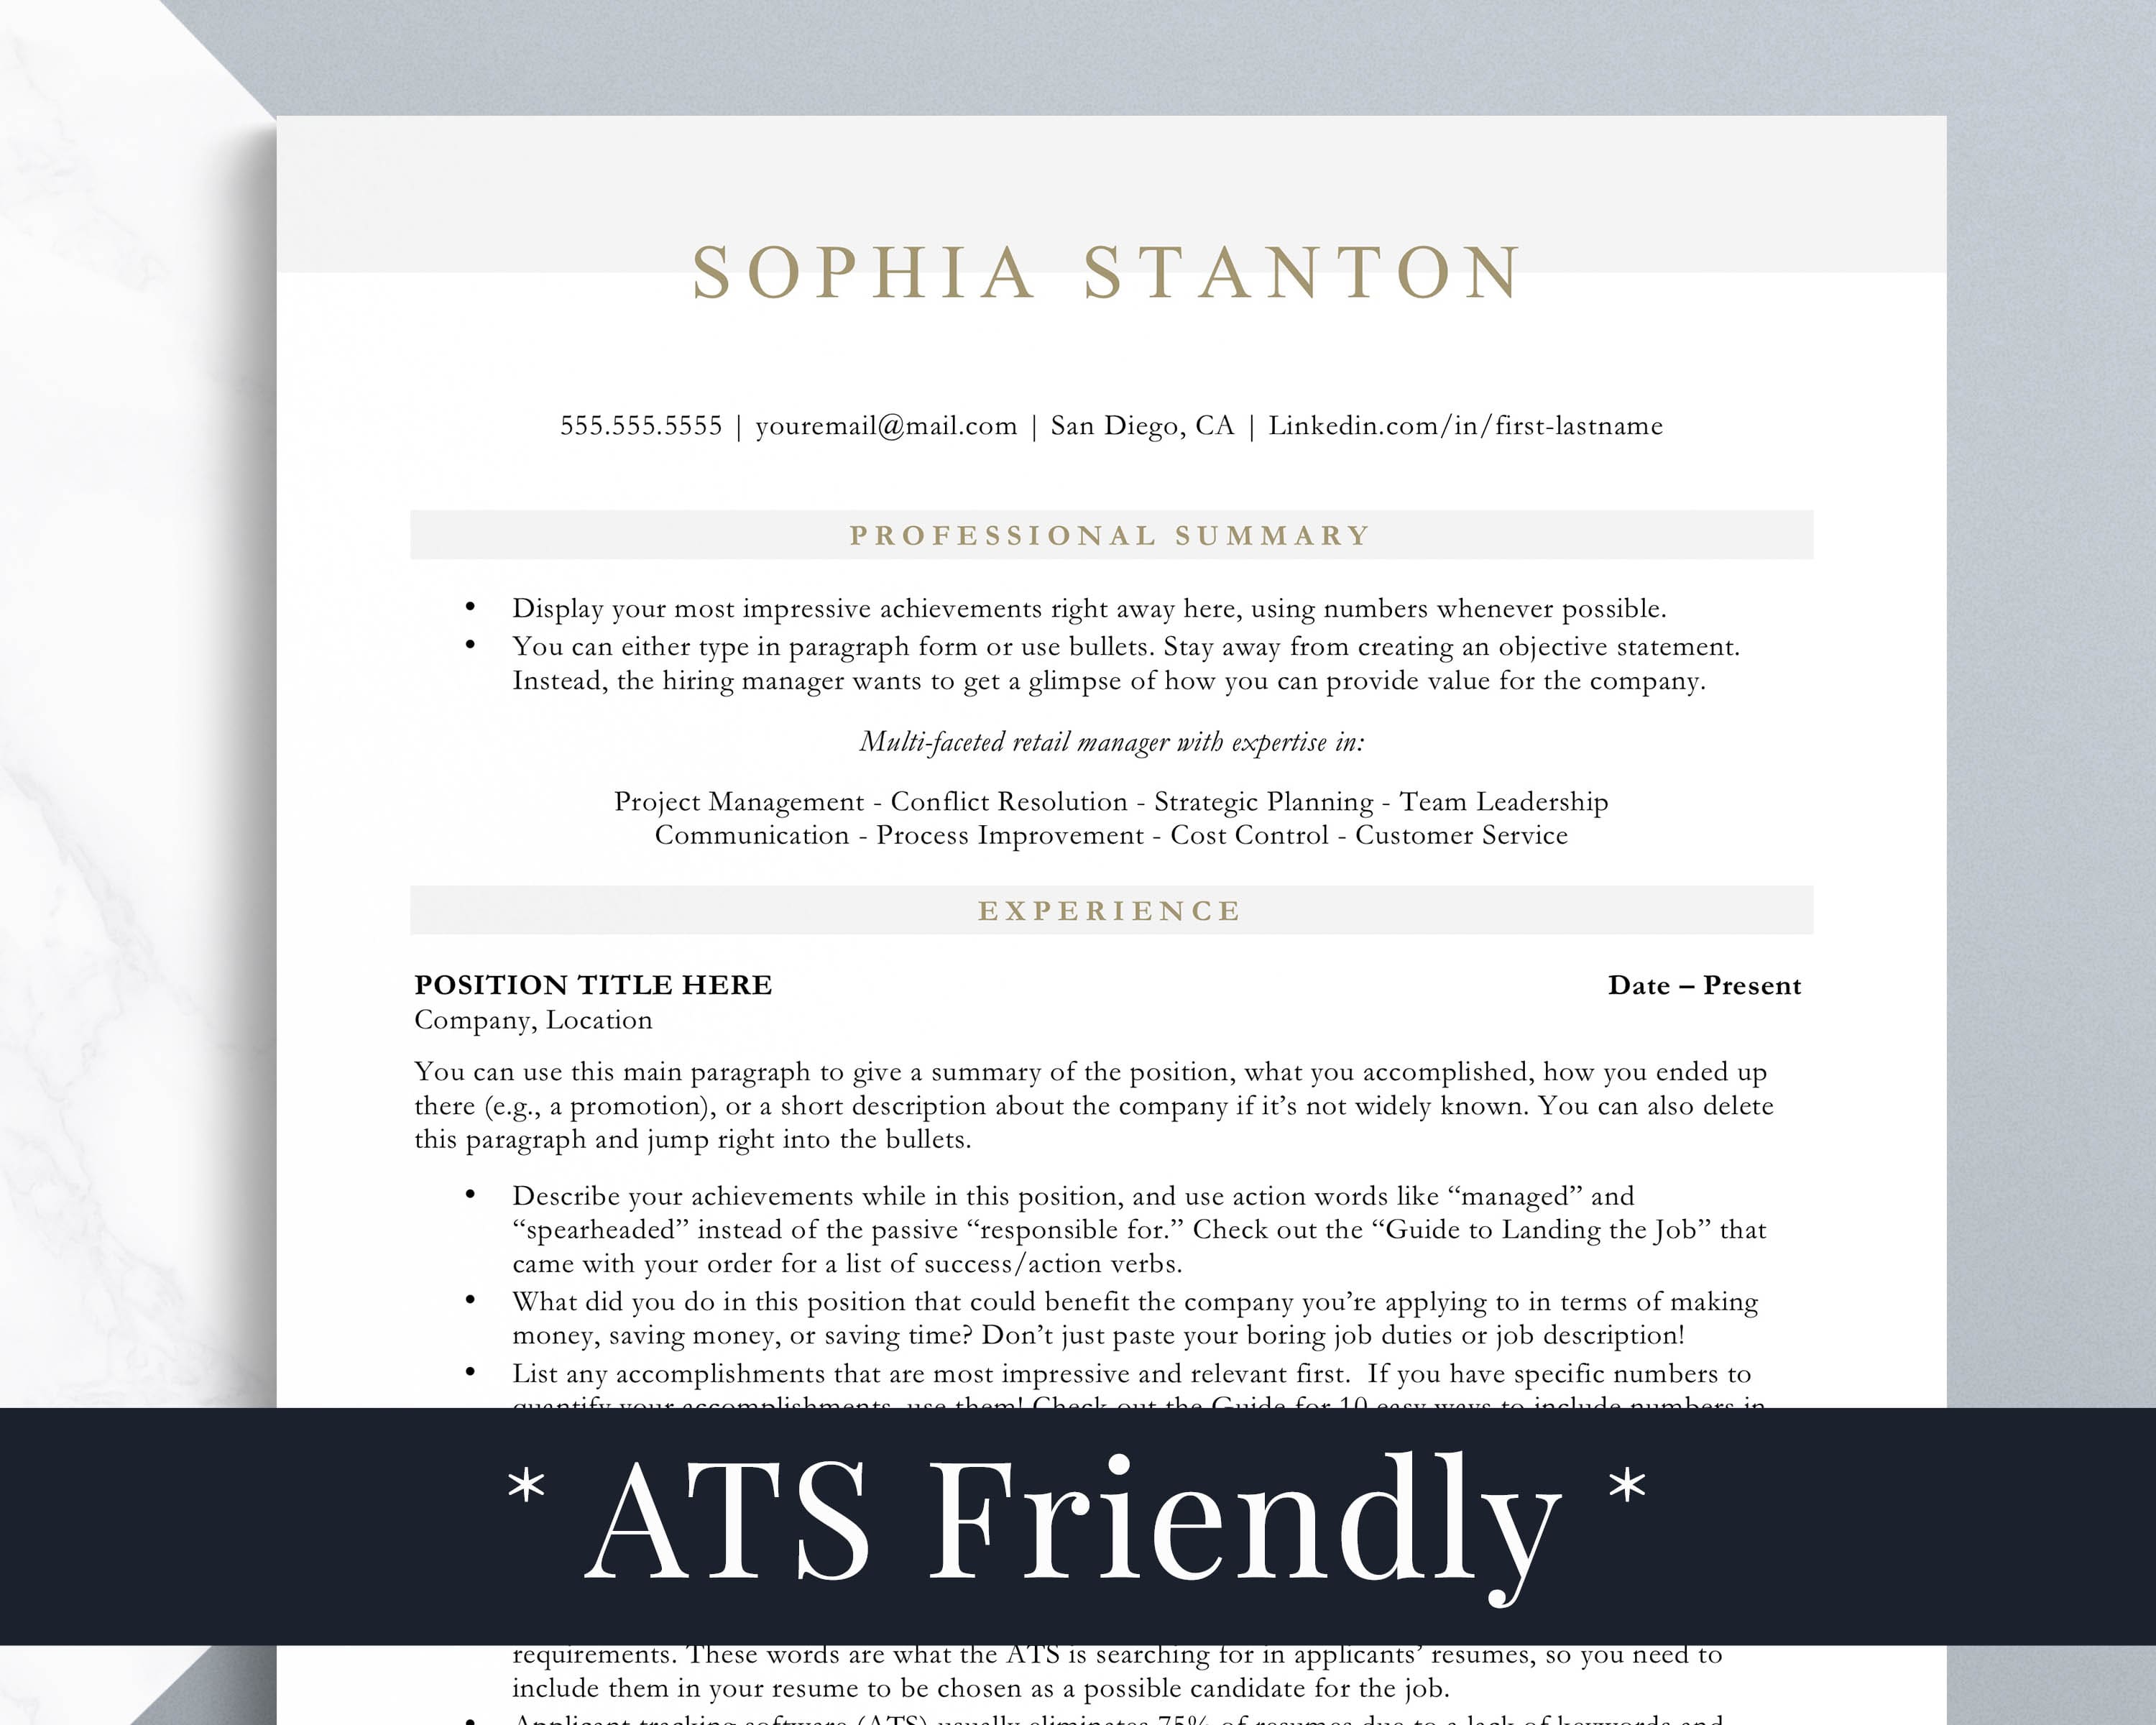 ATS friendly resume format design